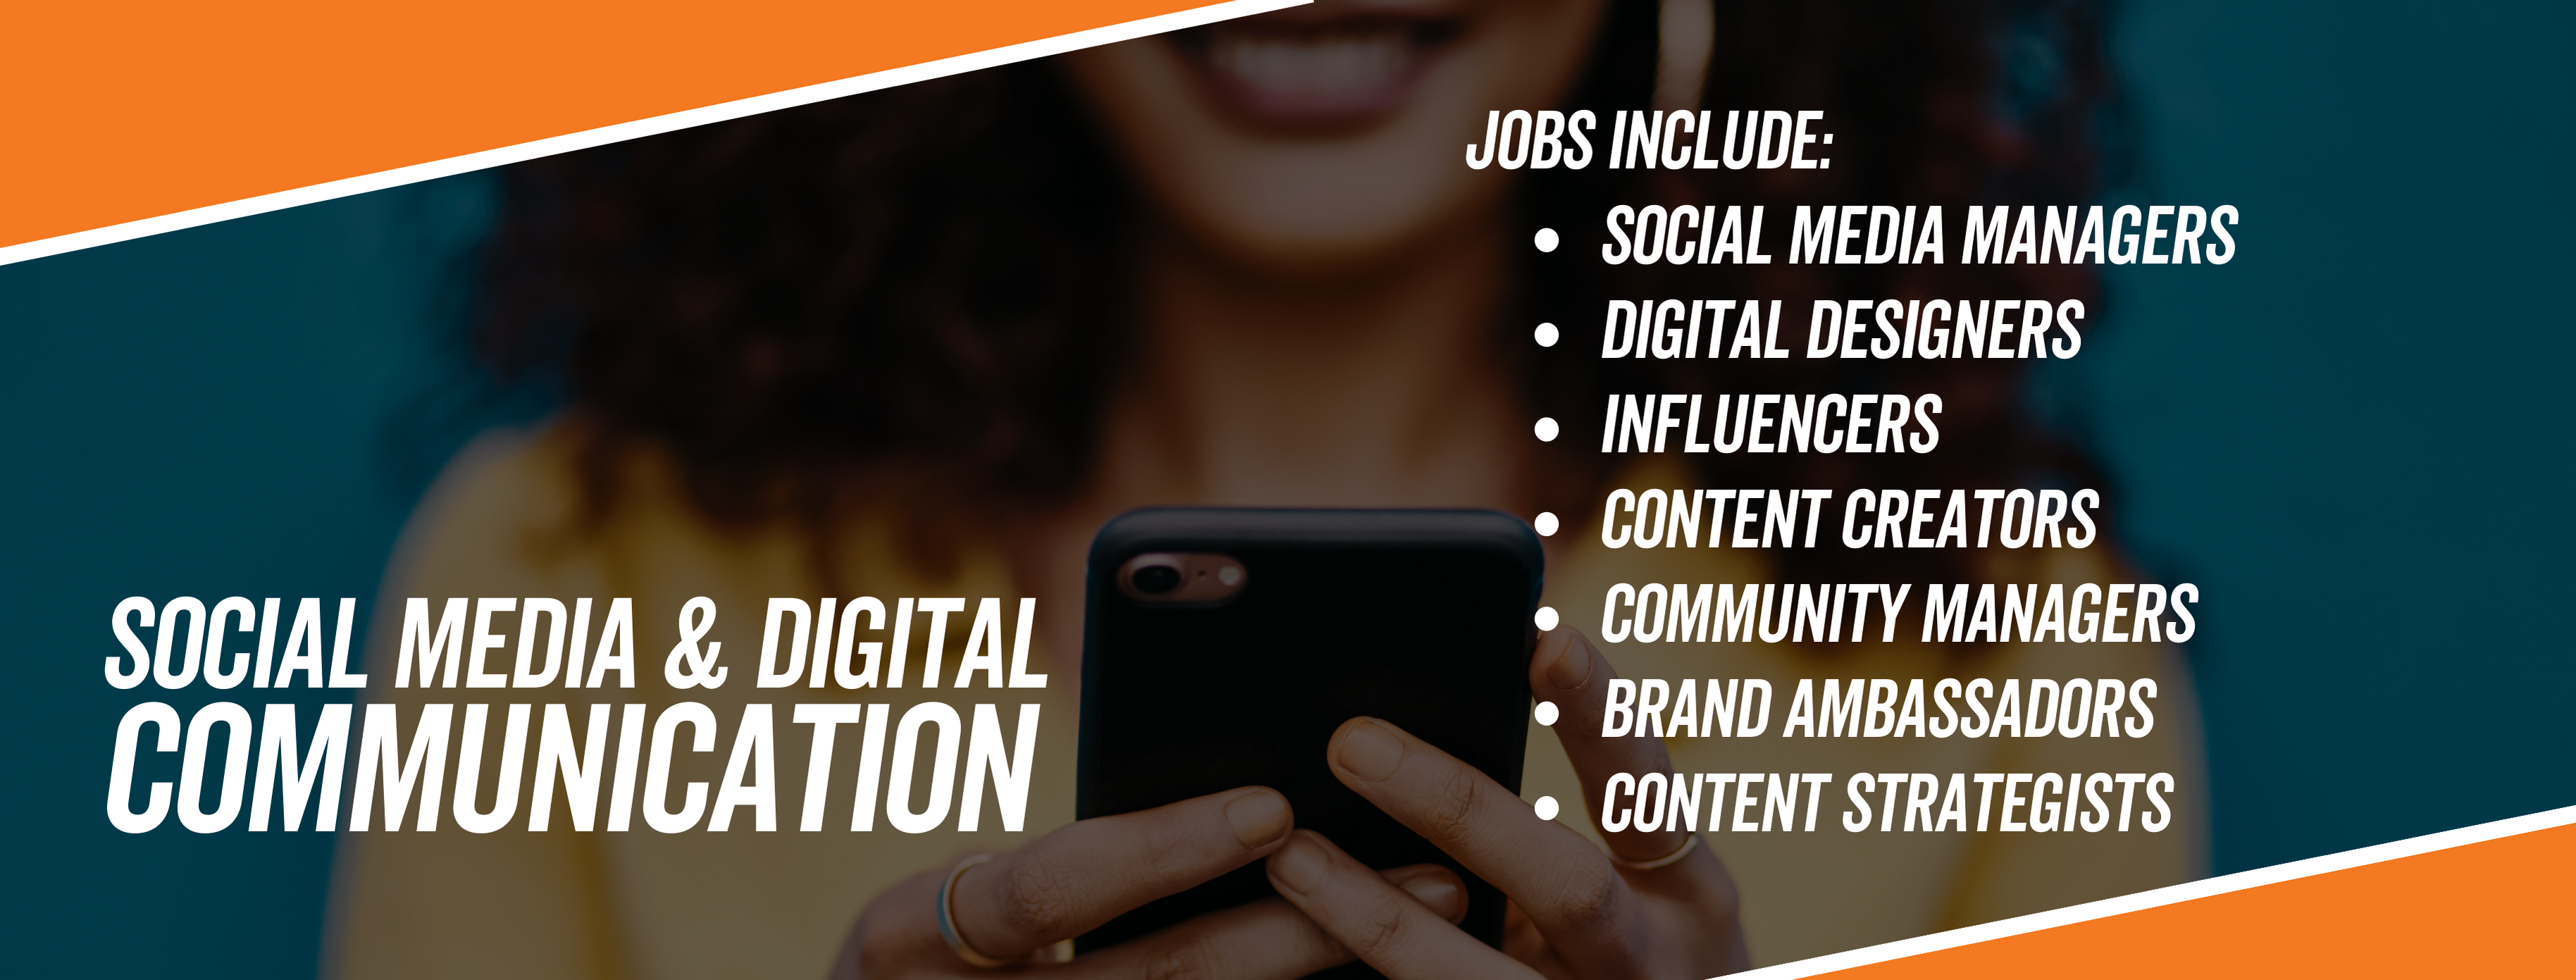 Social media and digital communication jobs include social media manager, digital designers, influencers, content creators, community managers, brand ambassadors, content strategists